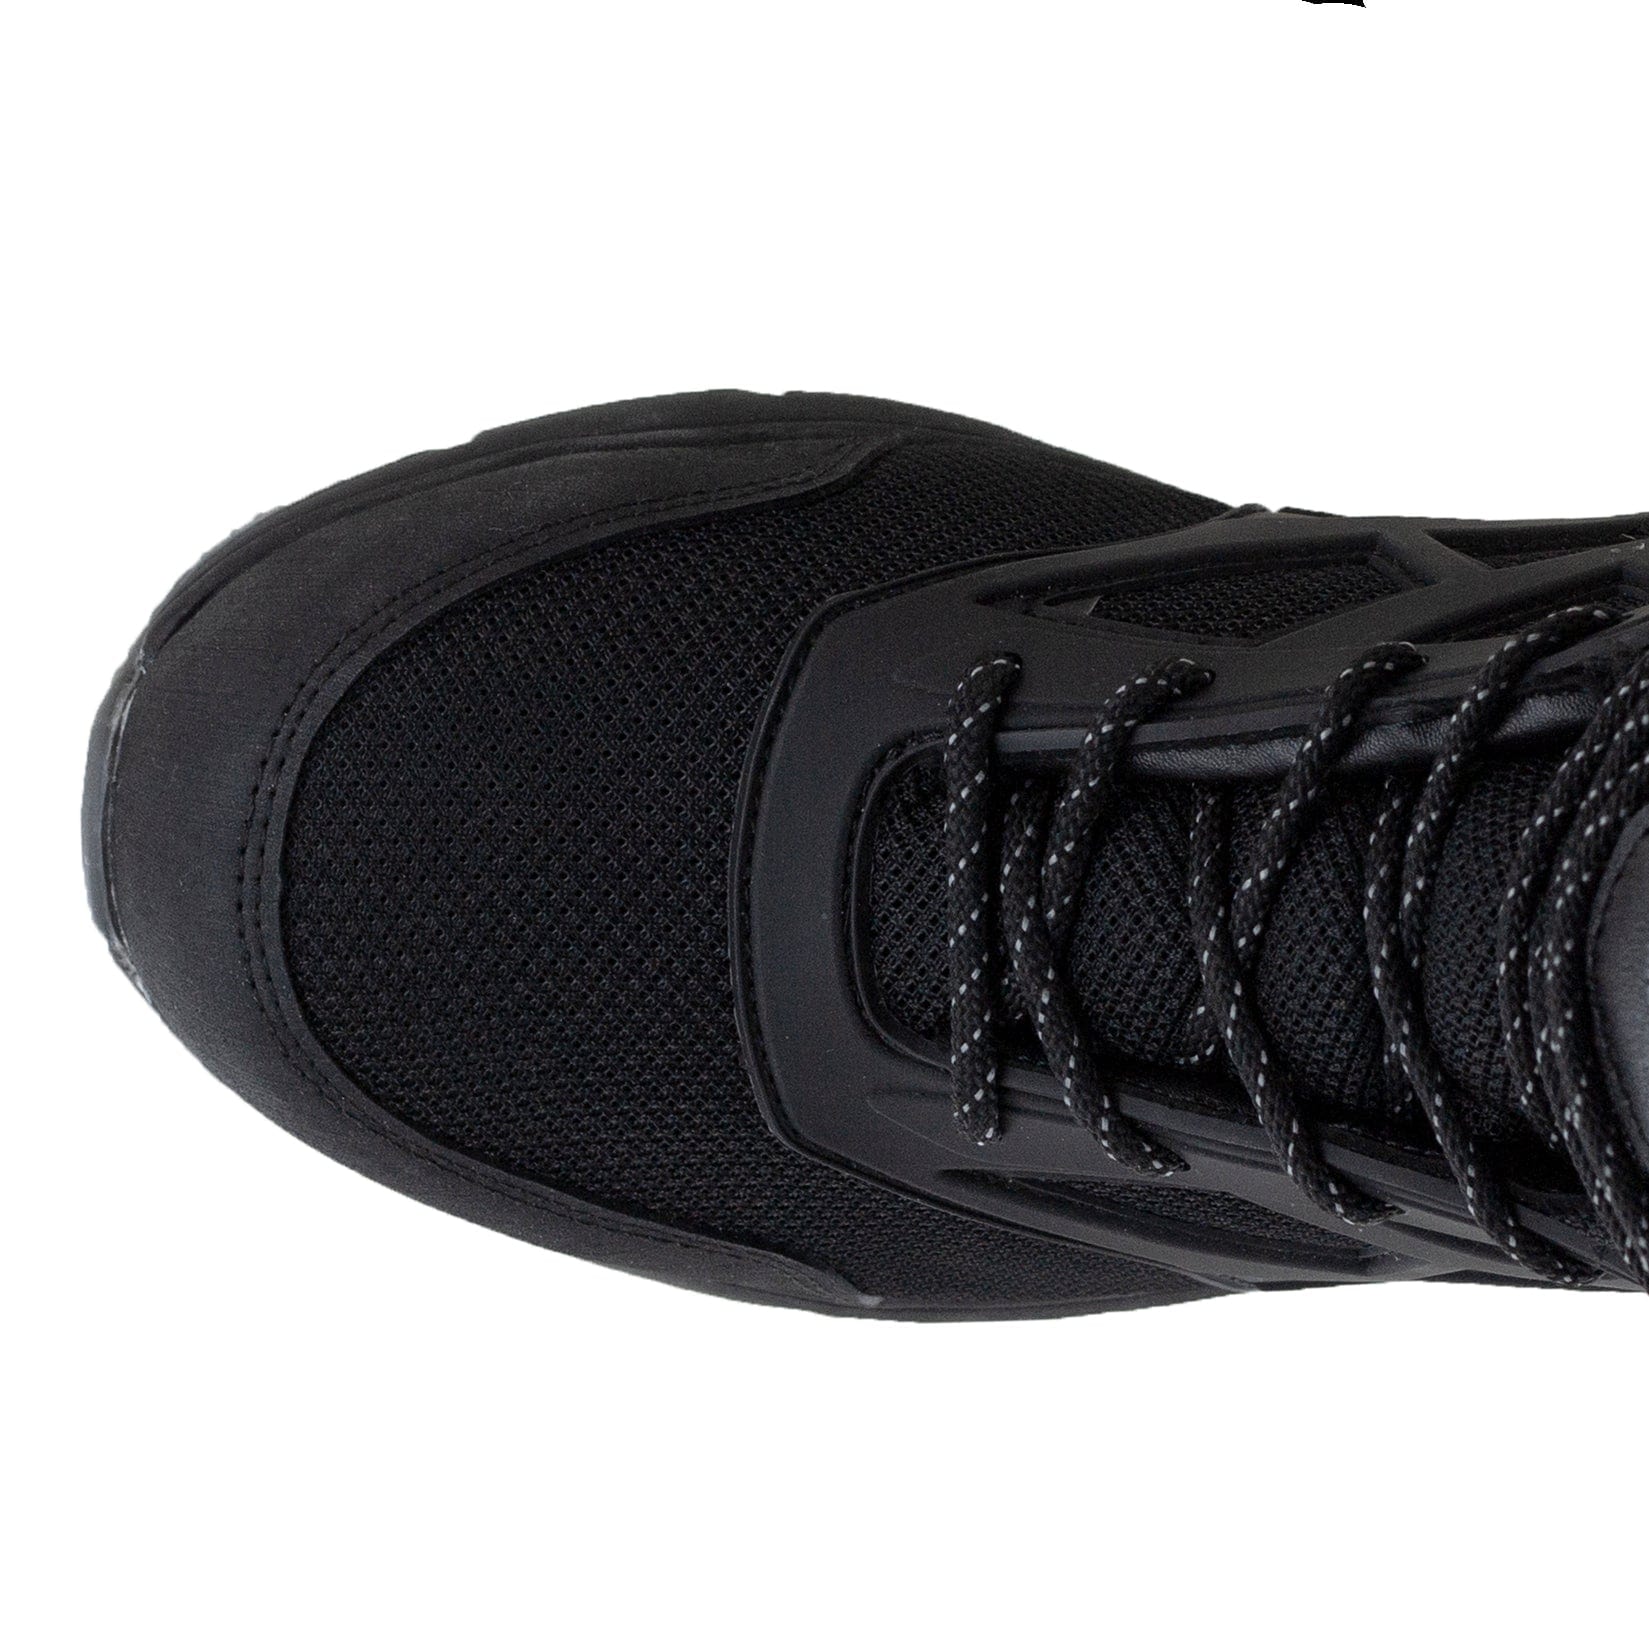 Non-slip waterproof carbon fiber toe work boots for men